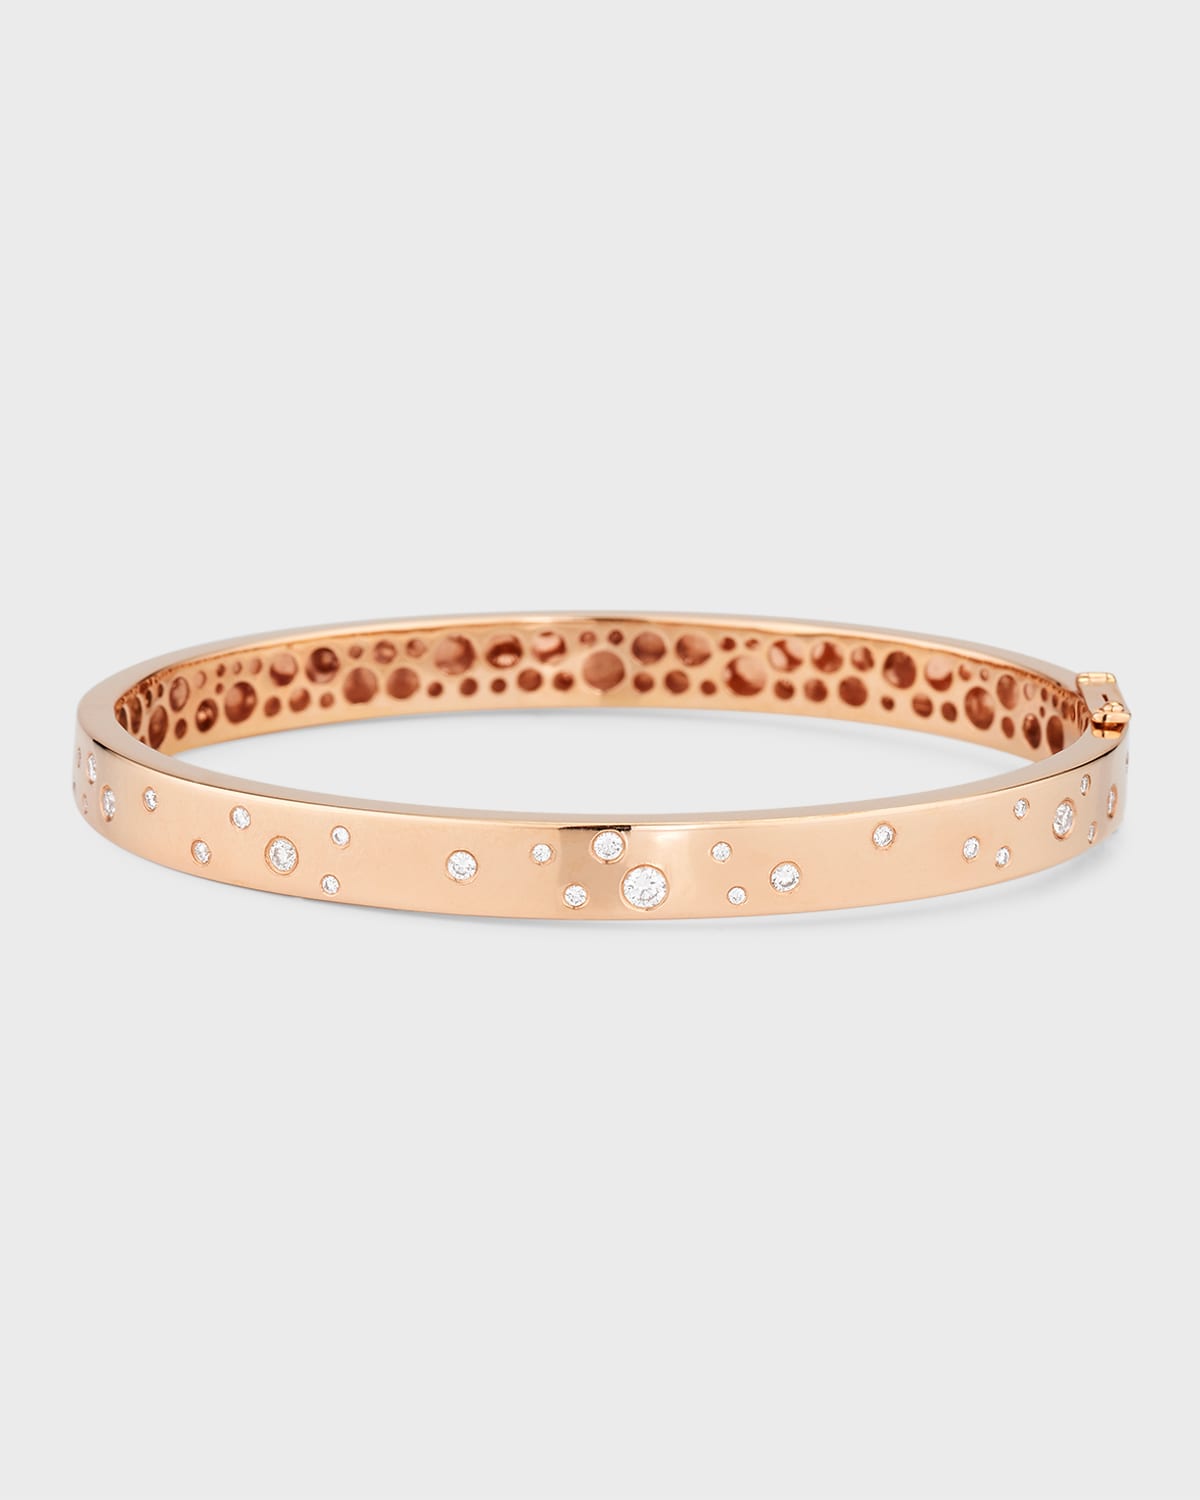 18k Gold Constellation Bangle Bracelet with Diamonds